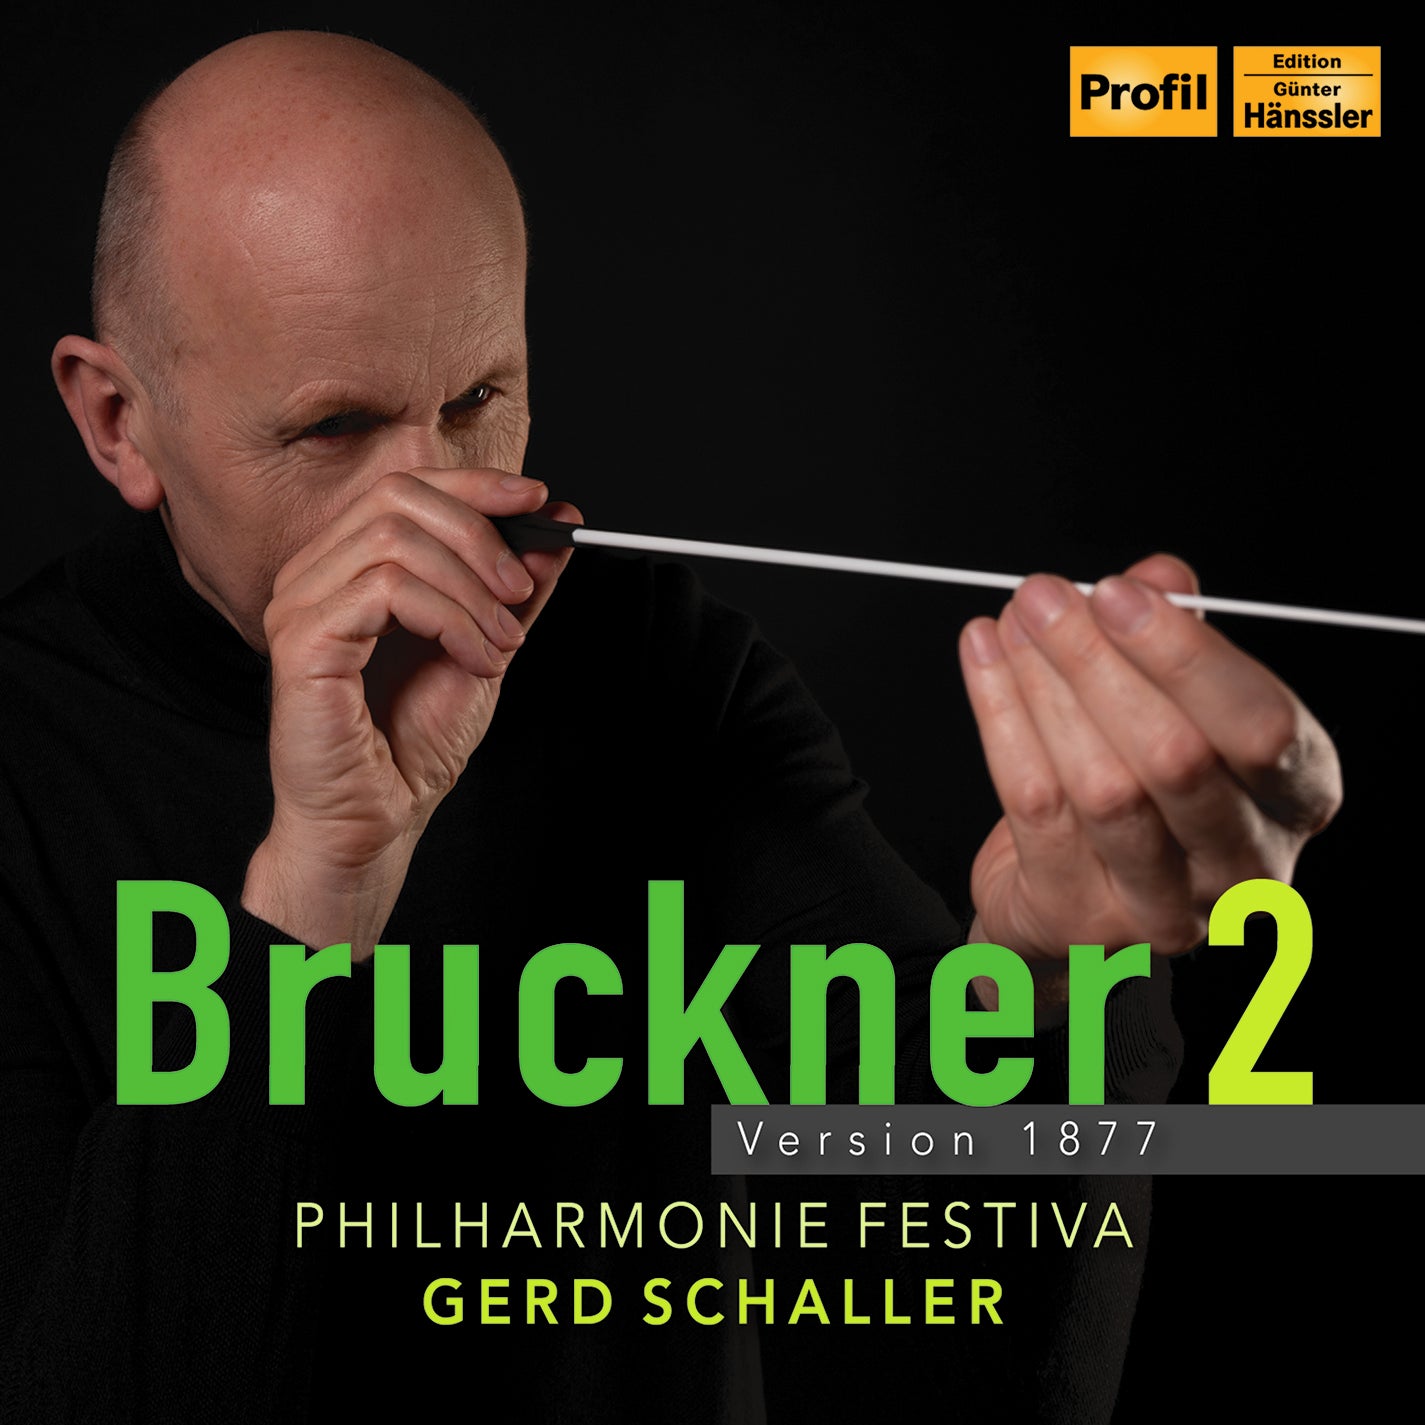 Bruckner: Symphony No. 2 in C Minor - Version 1877 / Philharmonie Festiva